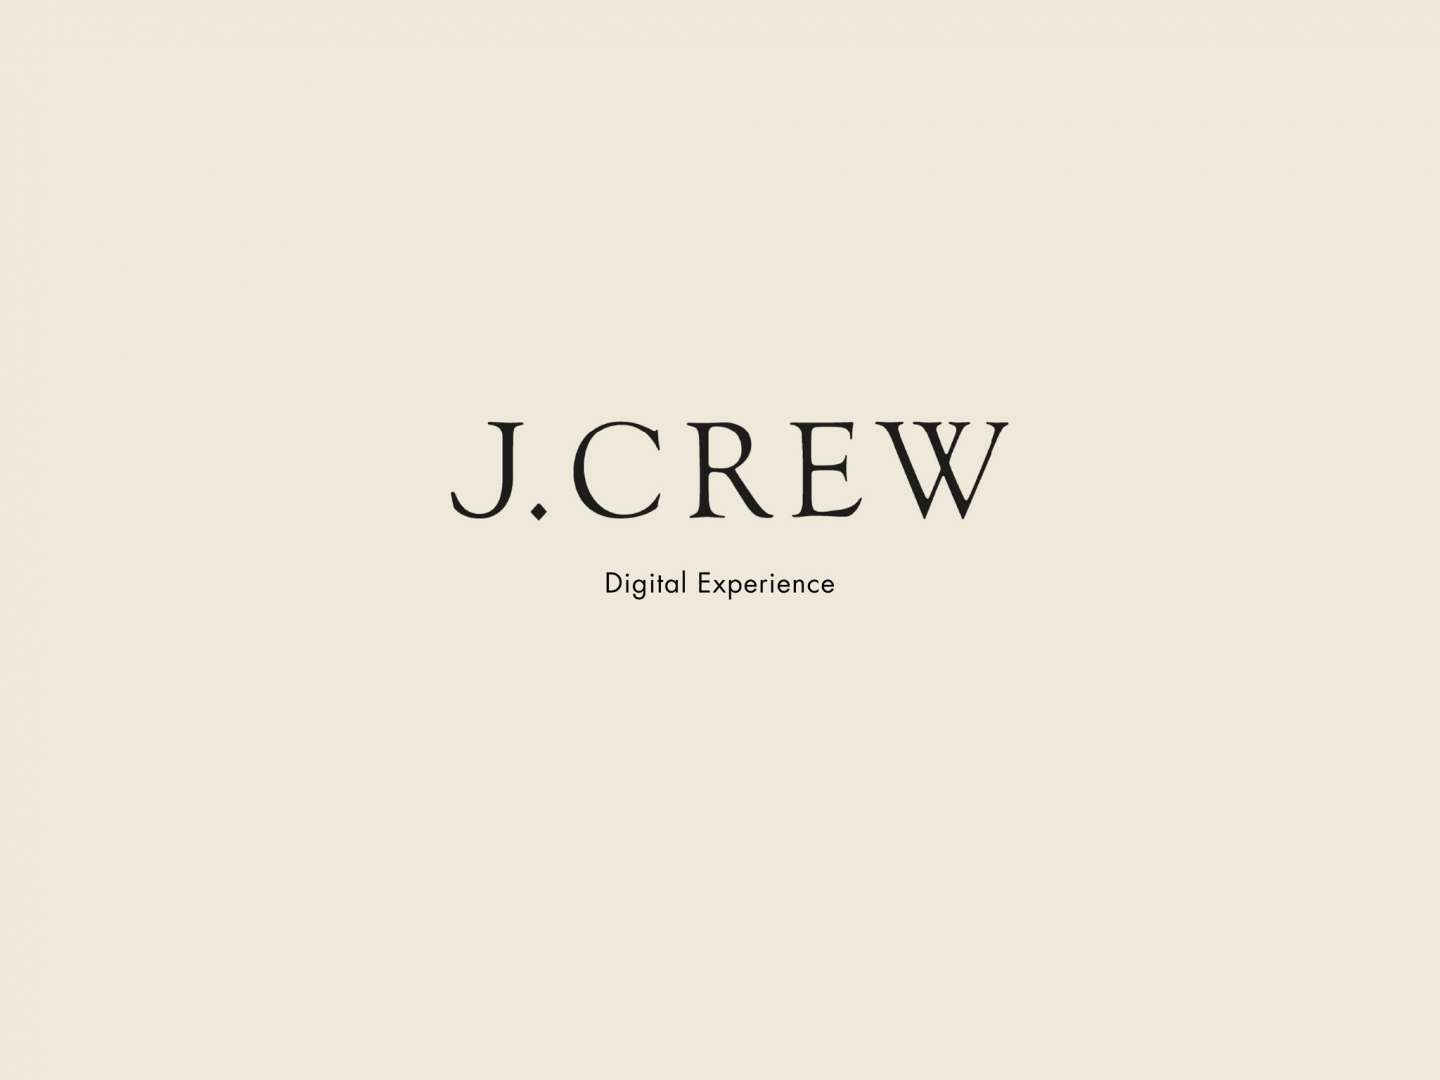 J.Crew digital experience